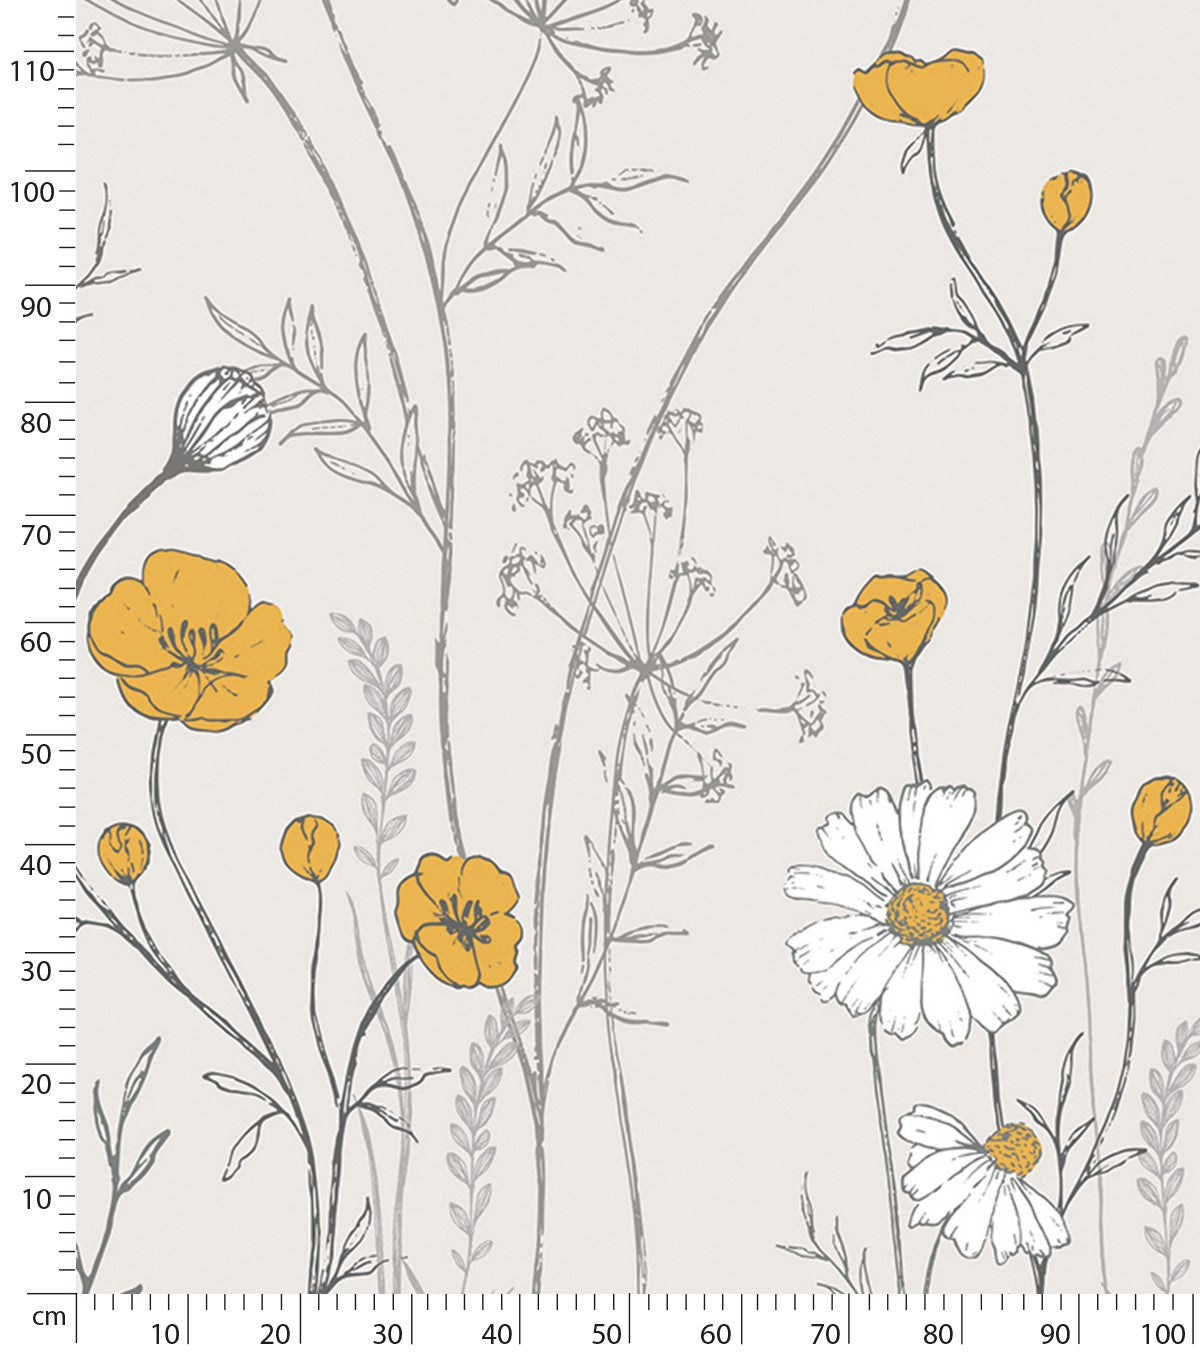 CHAMOMILE - Panoramic wallpaper - Chamomile flowers